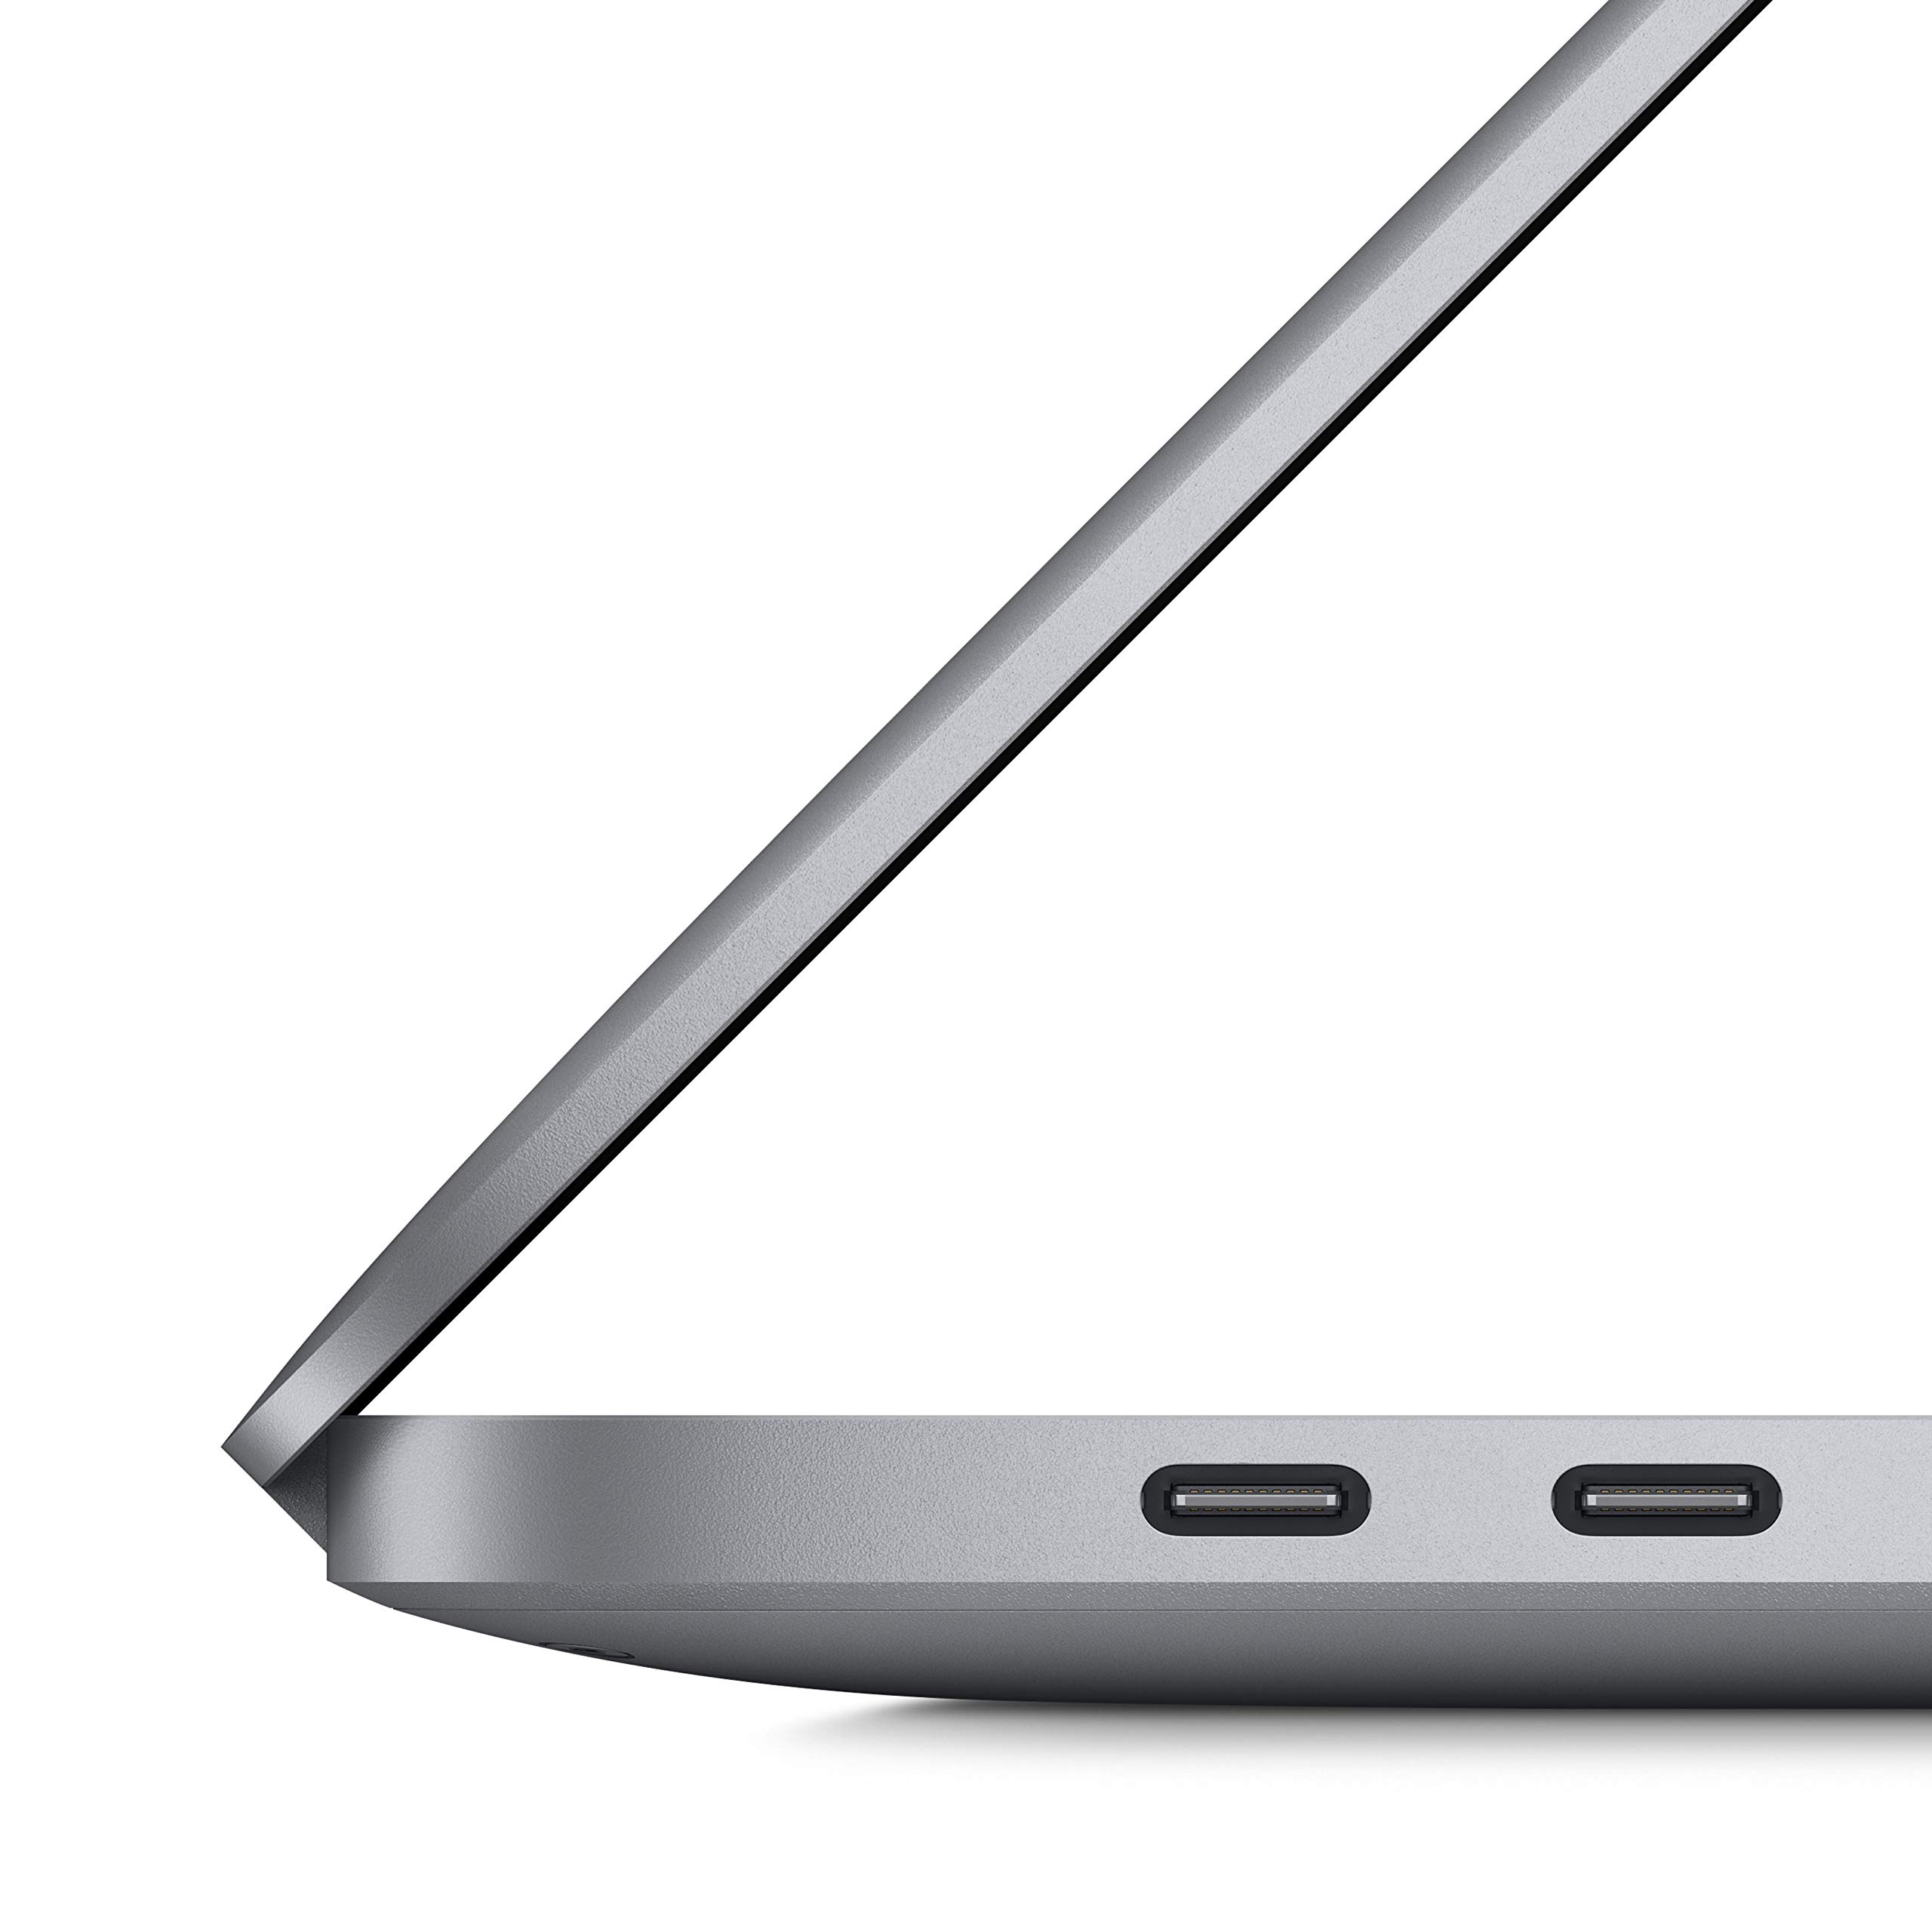 Apple 2019 MacBook Pro (16-inch, 16GB RAM, 1TB Storage, 2.3GHz Intel Core i9) - Space Gray